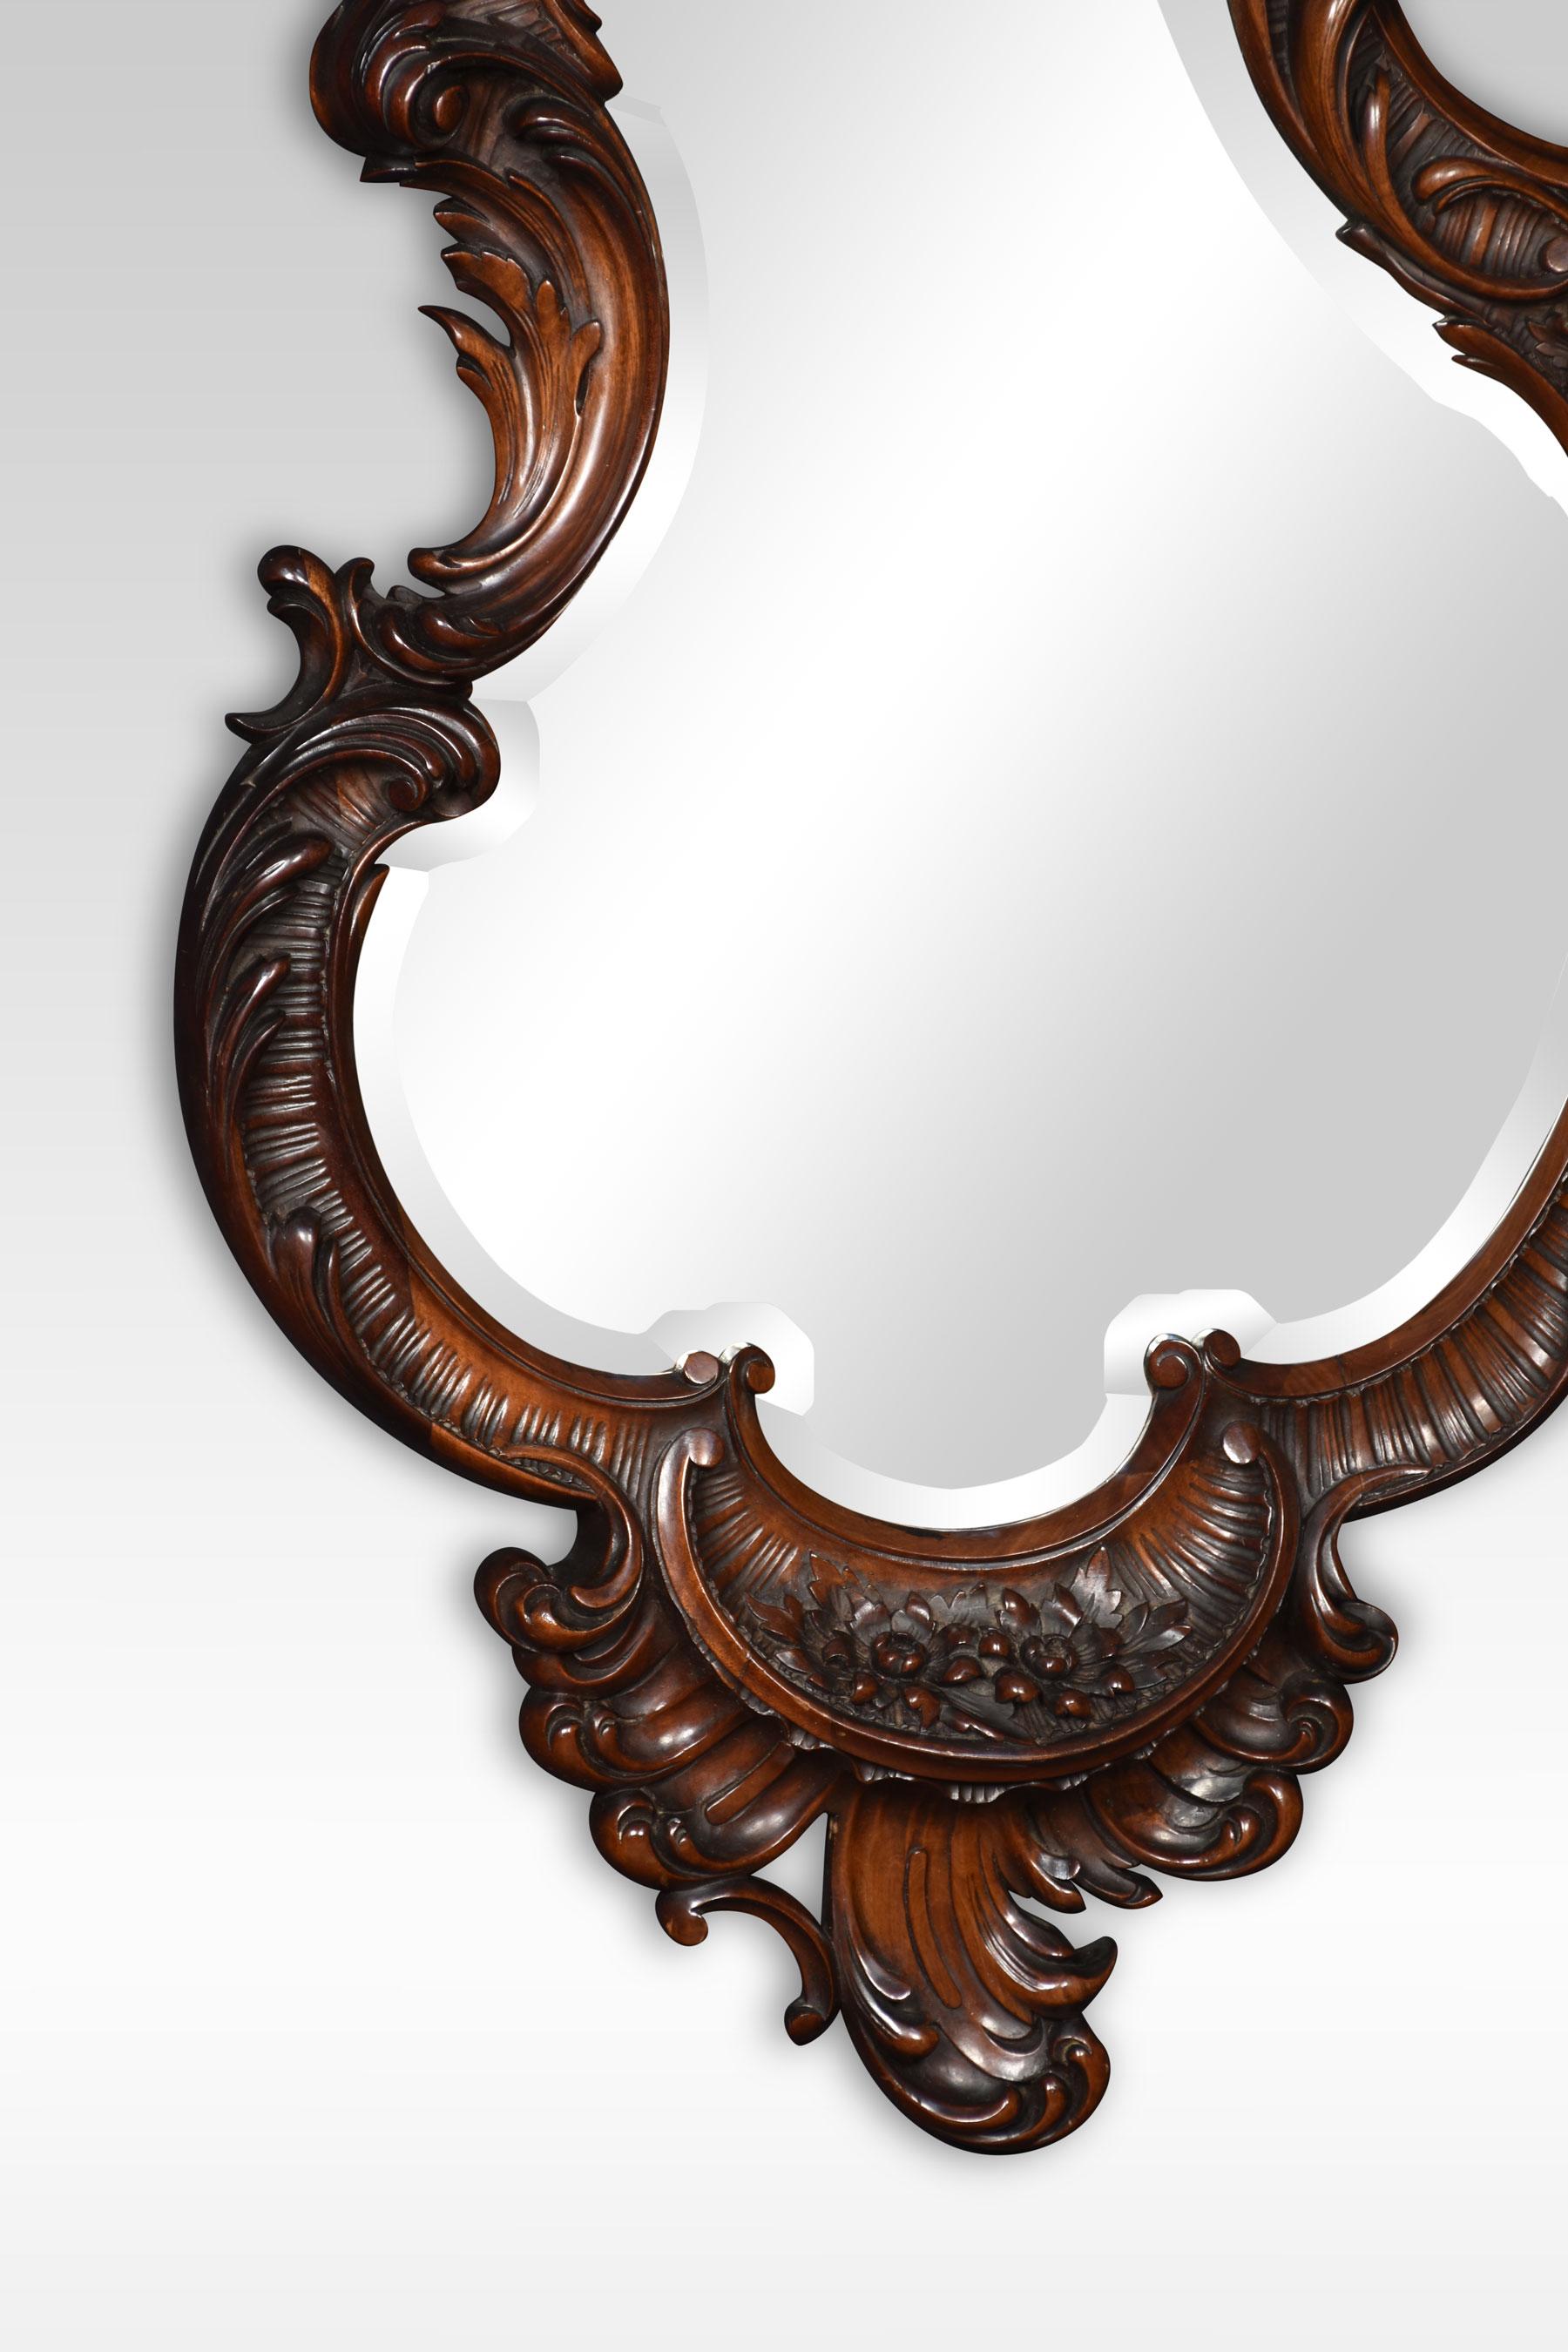 20th Century Rococo Revival Mahogany Wall Mirror For Sale